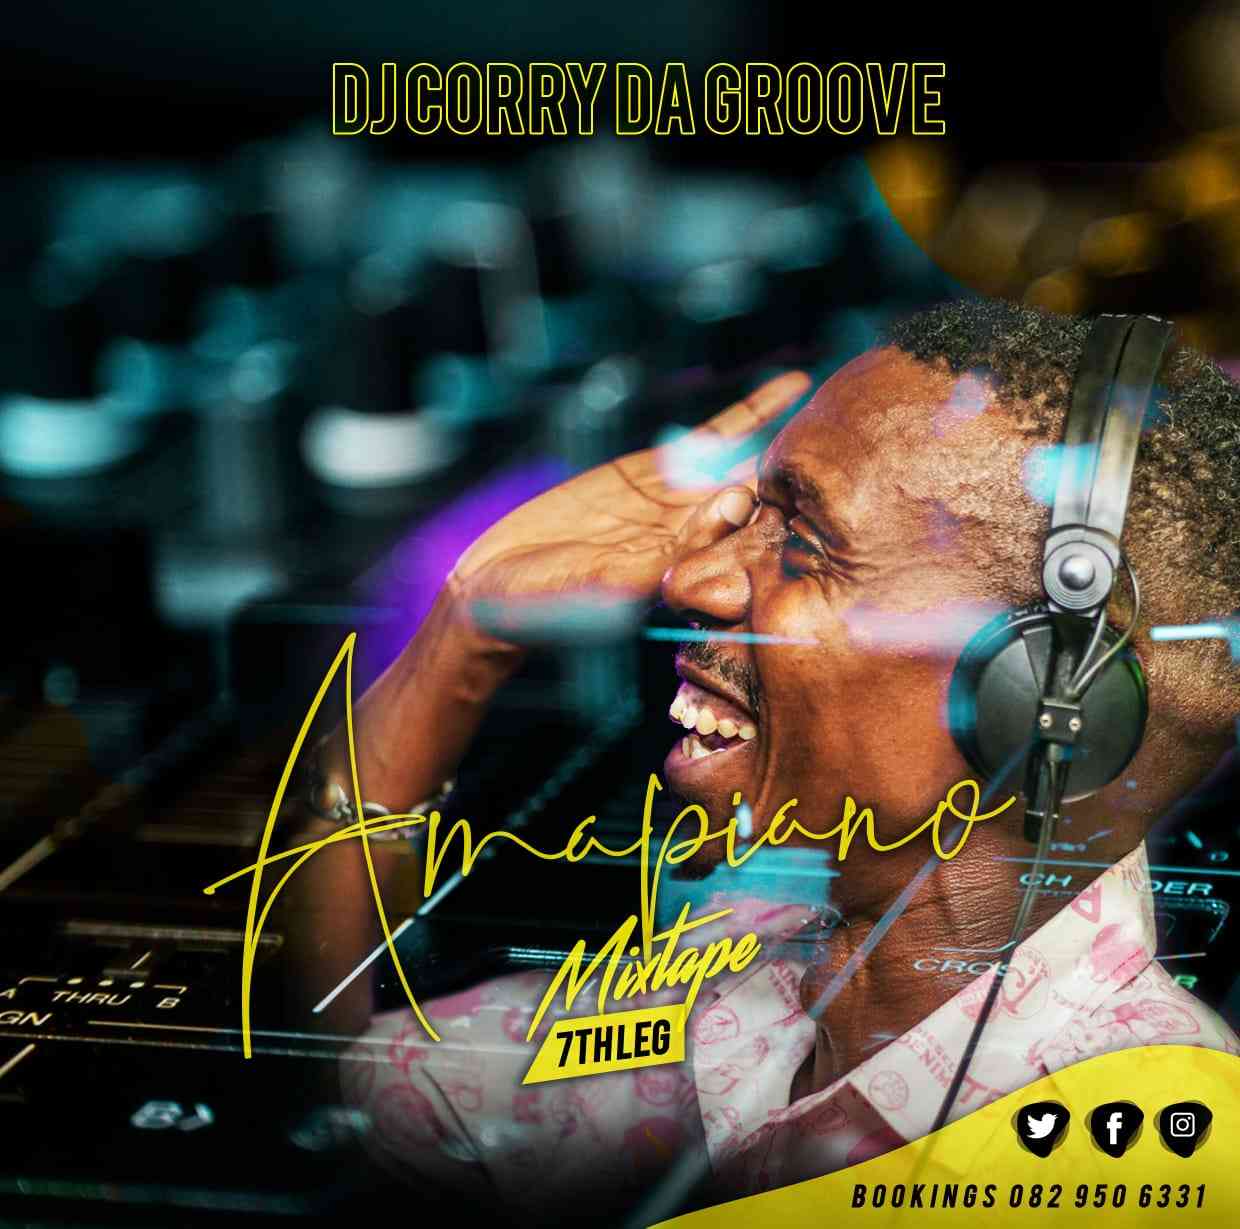 DJ Corry Da Groove Amapiano Mixtape 7th Leg